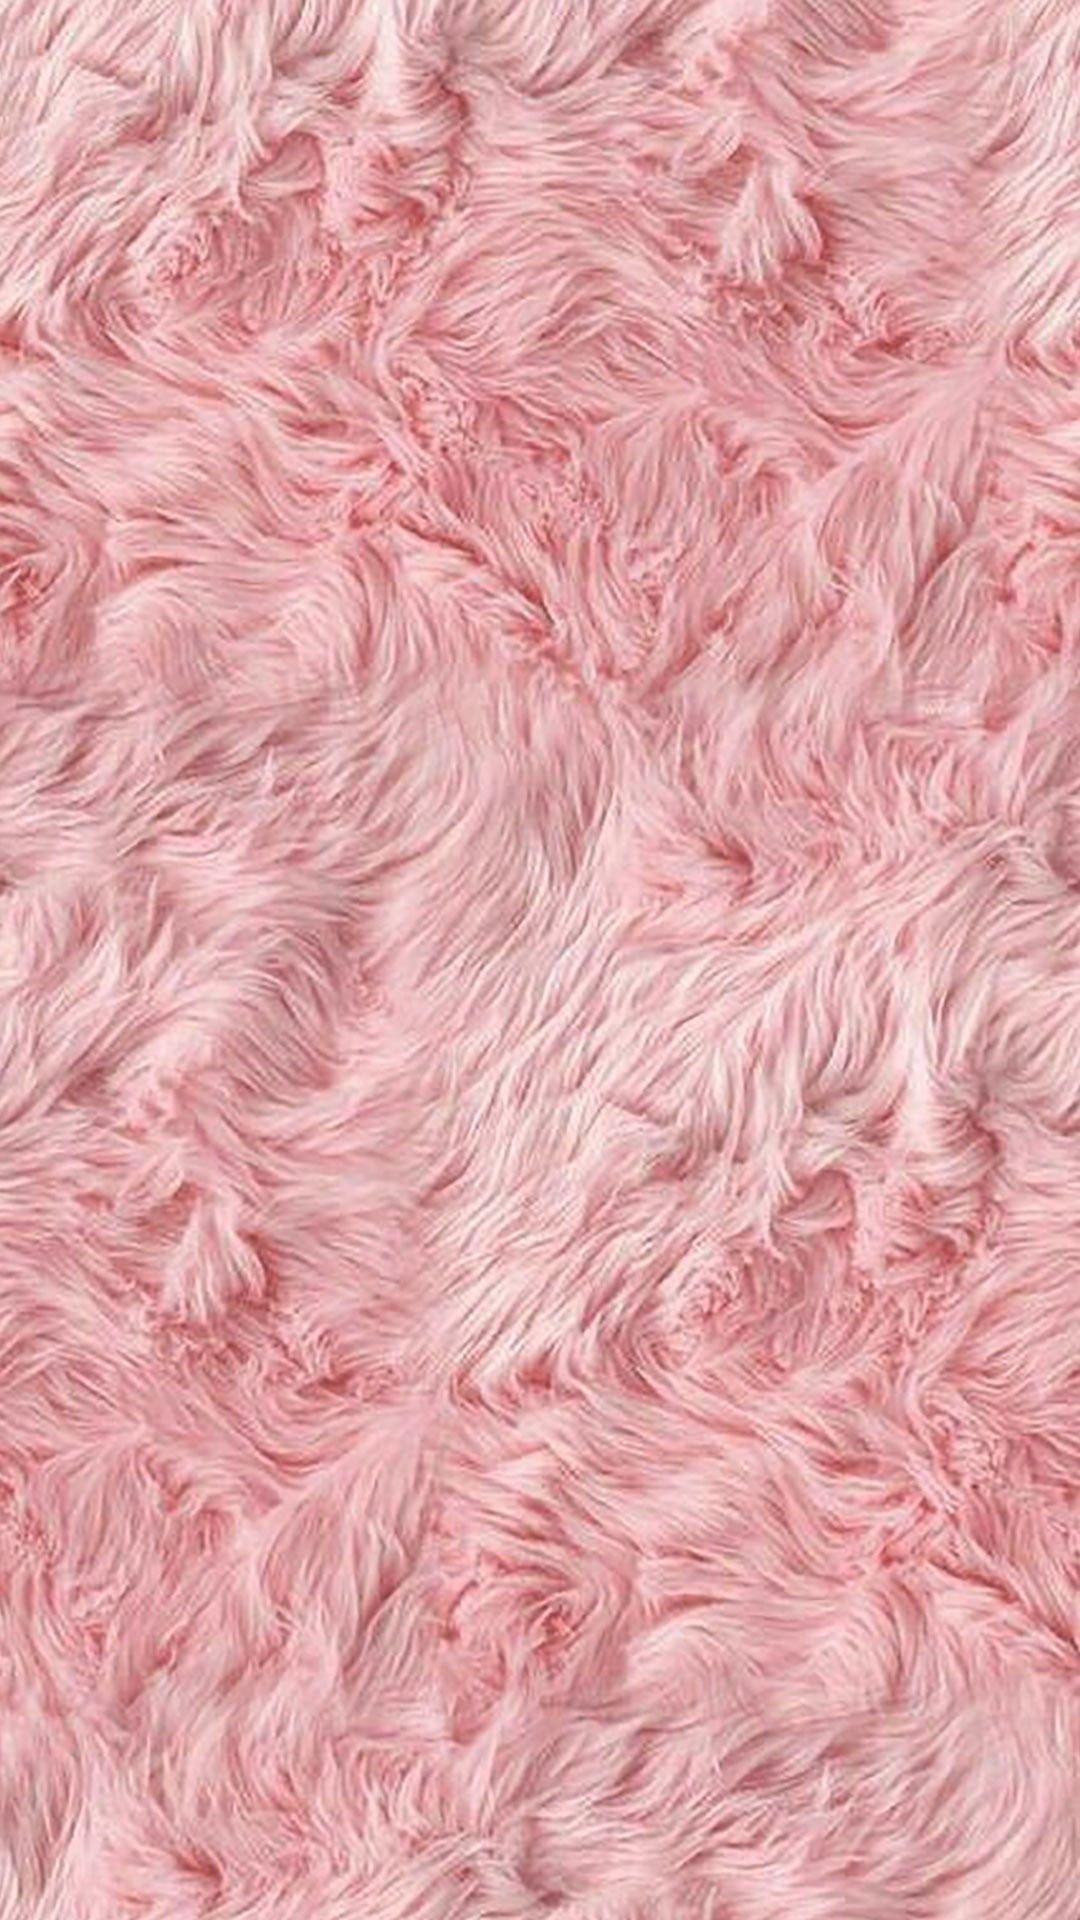 1080x1920 Pink Fur Wallpaper